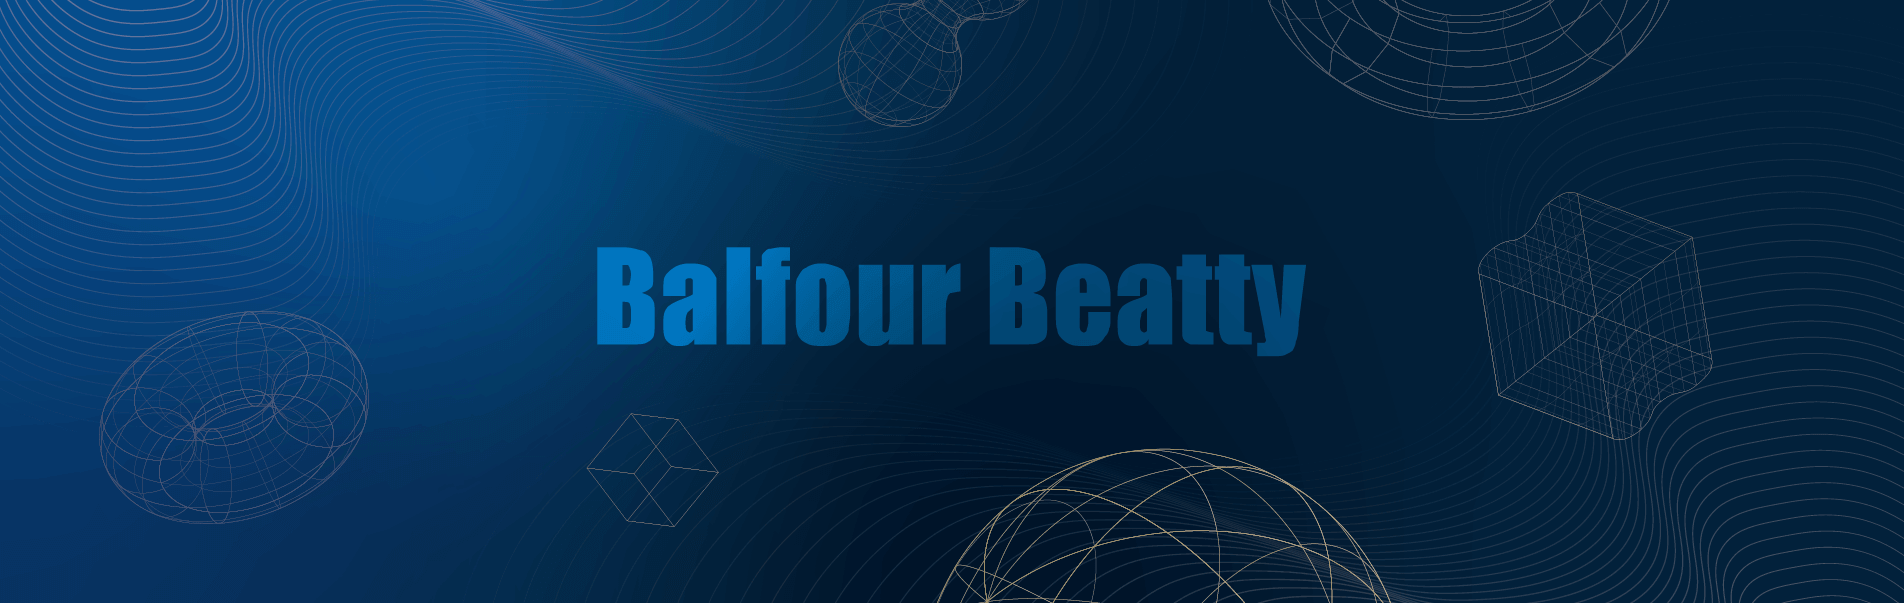 balfour beatty